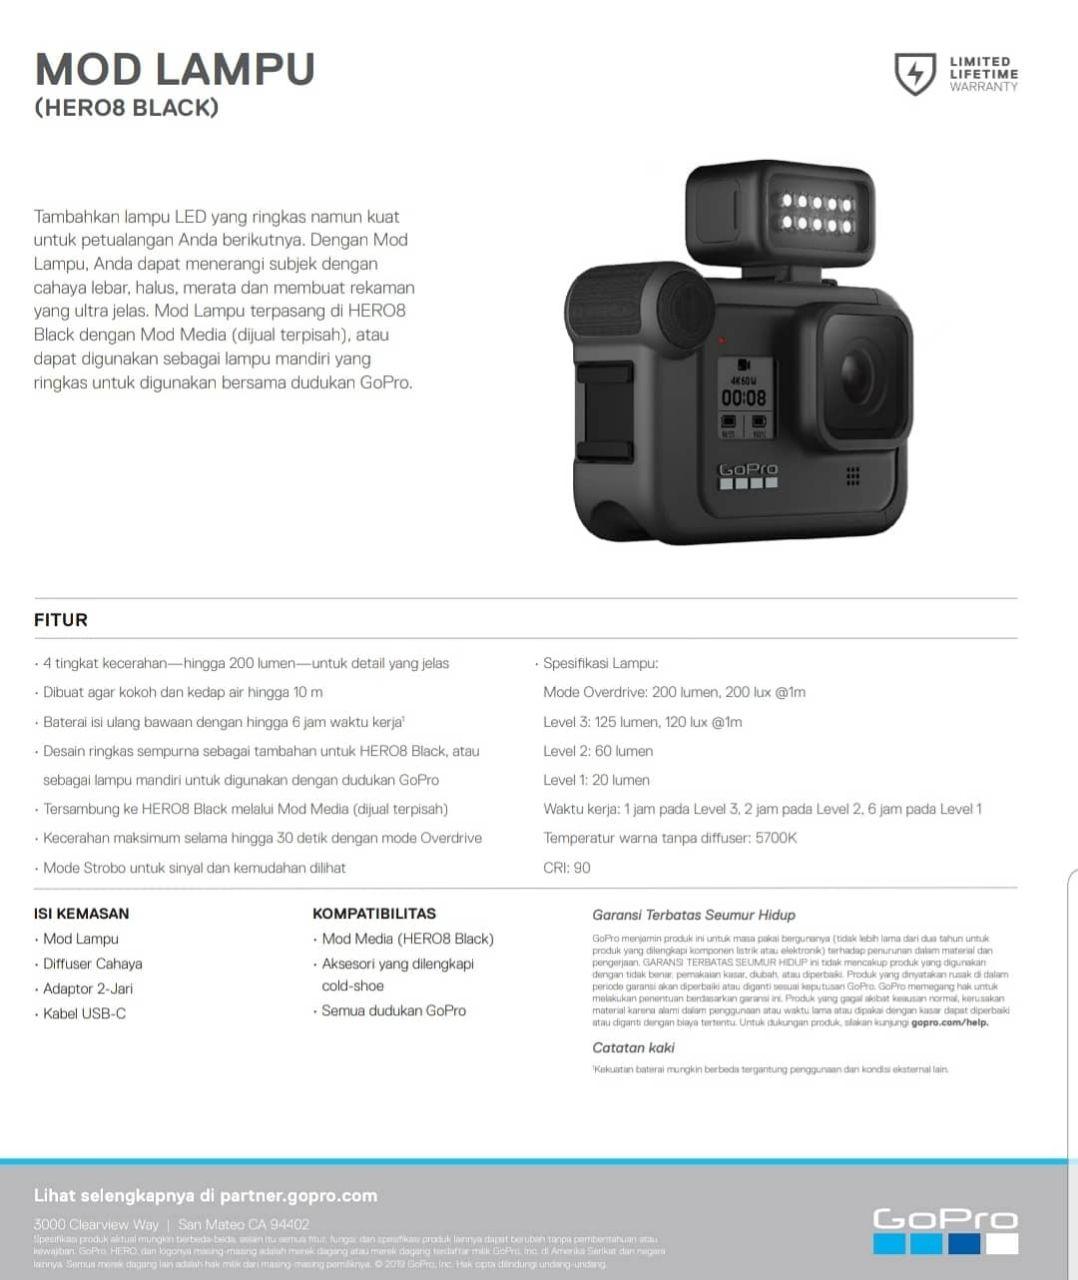 Jual Light Mod Gopro HERO8 Black - Mod Lampu harga spesifikasi review